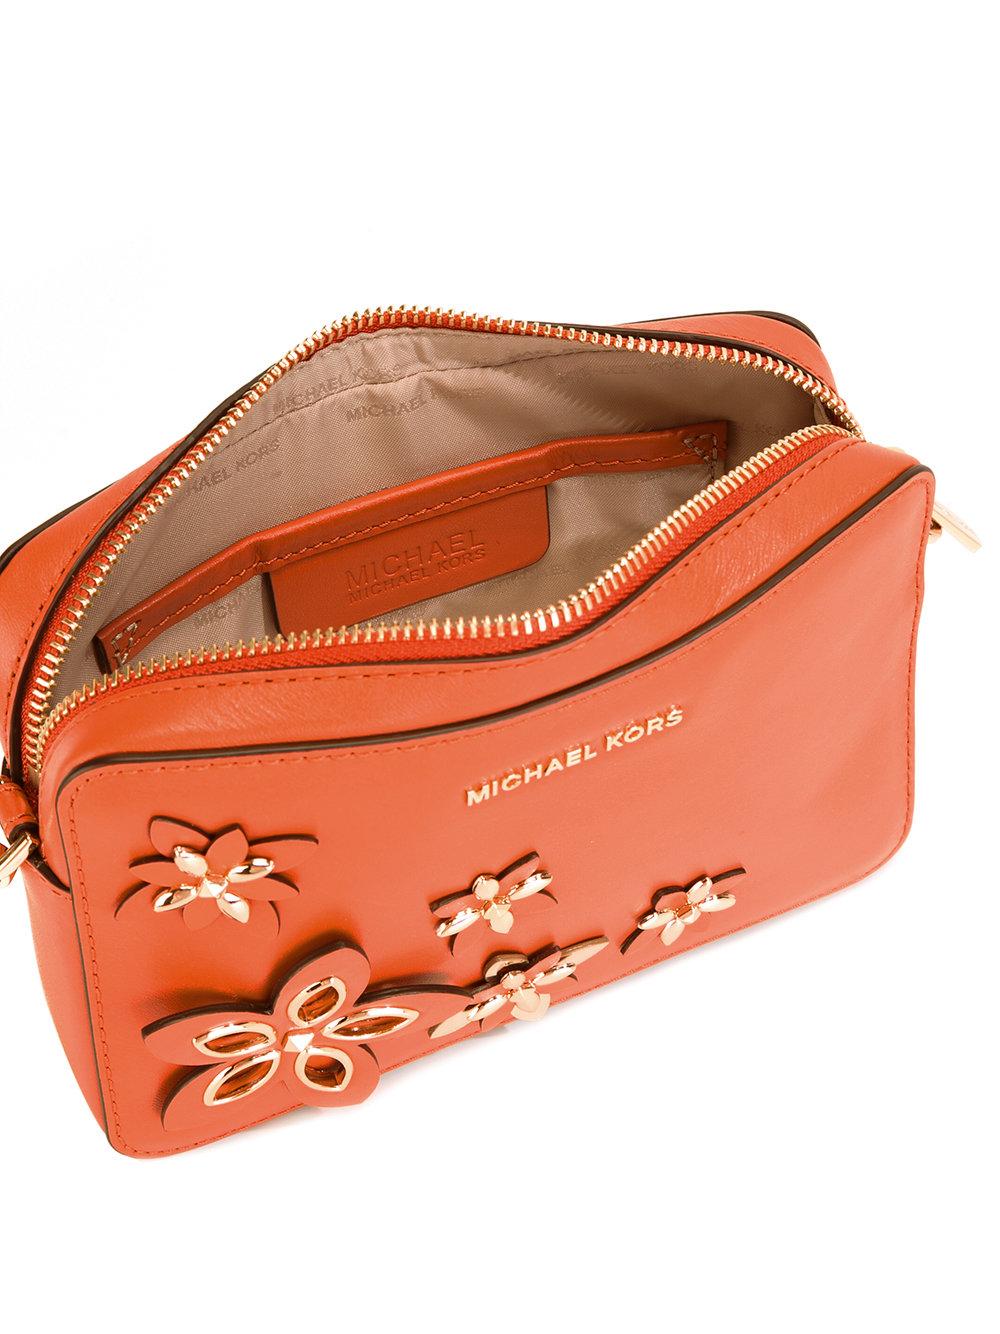 MICHAEL Michael Kors Leather Floral Crossbody Bag in Yellow/Orange (Orange) - Lyst